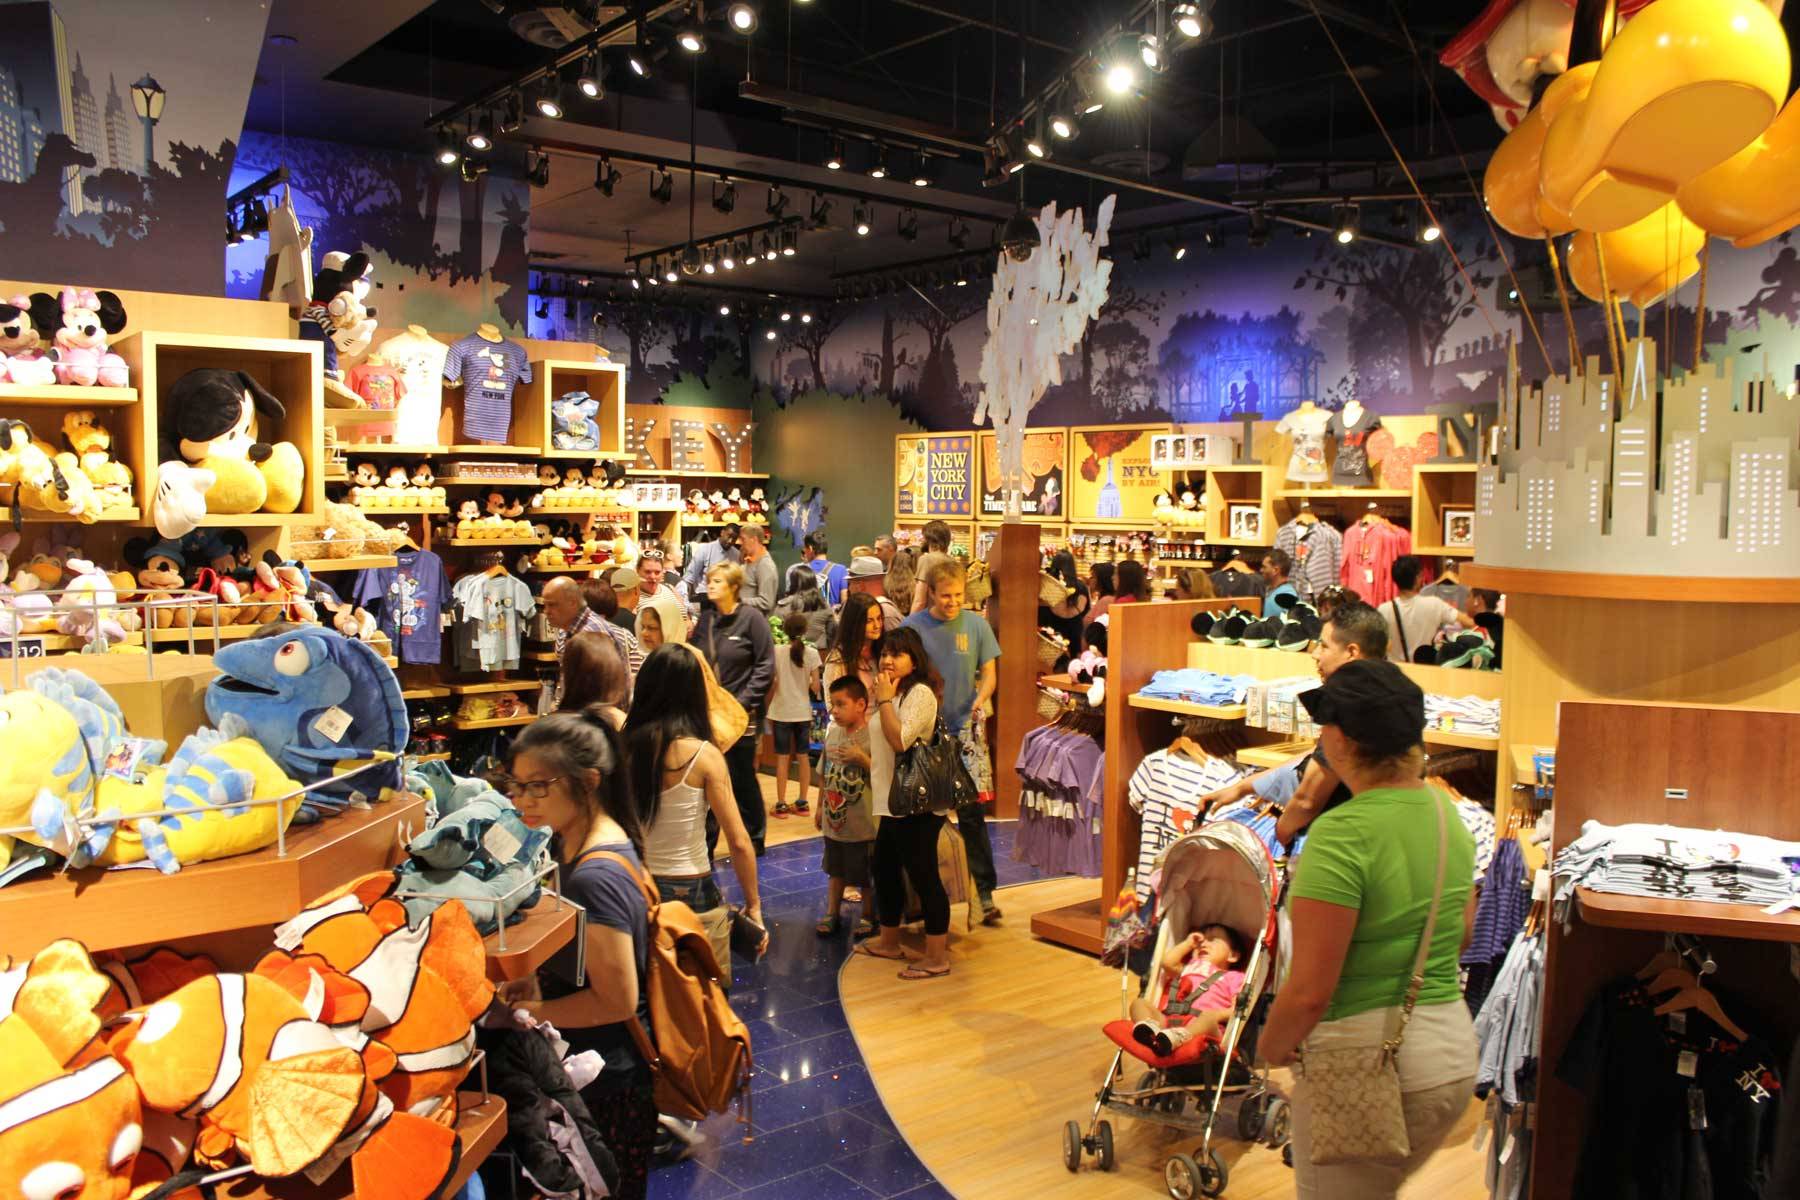 Inside the Disney Store